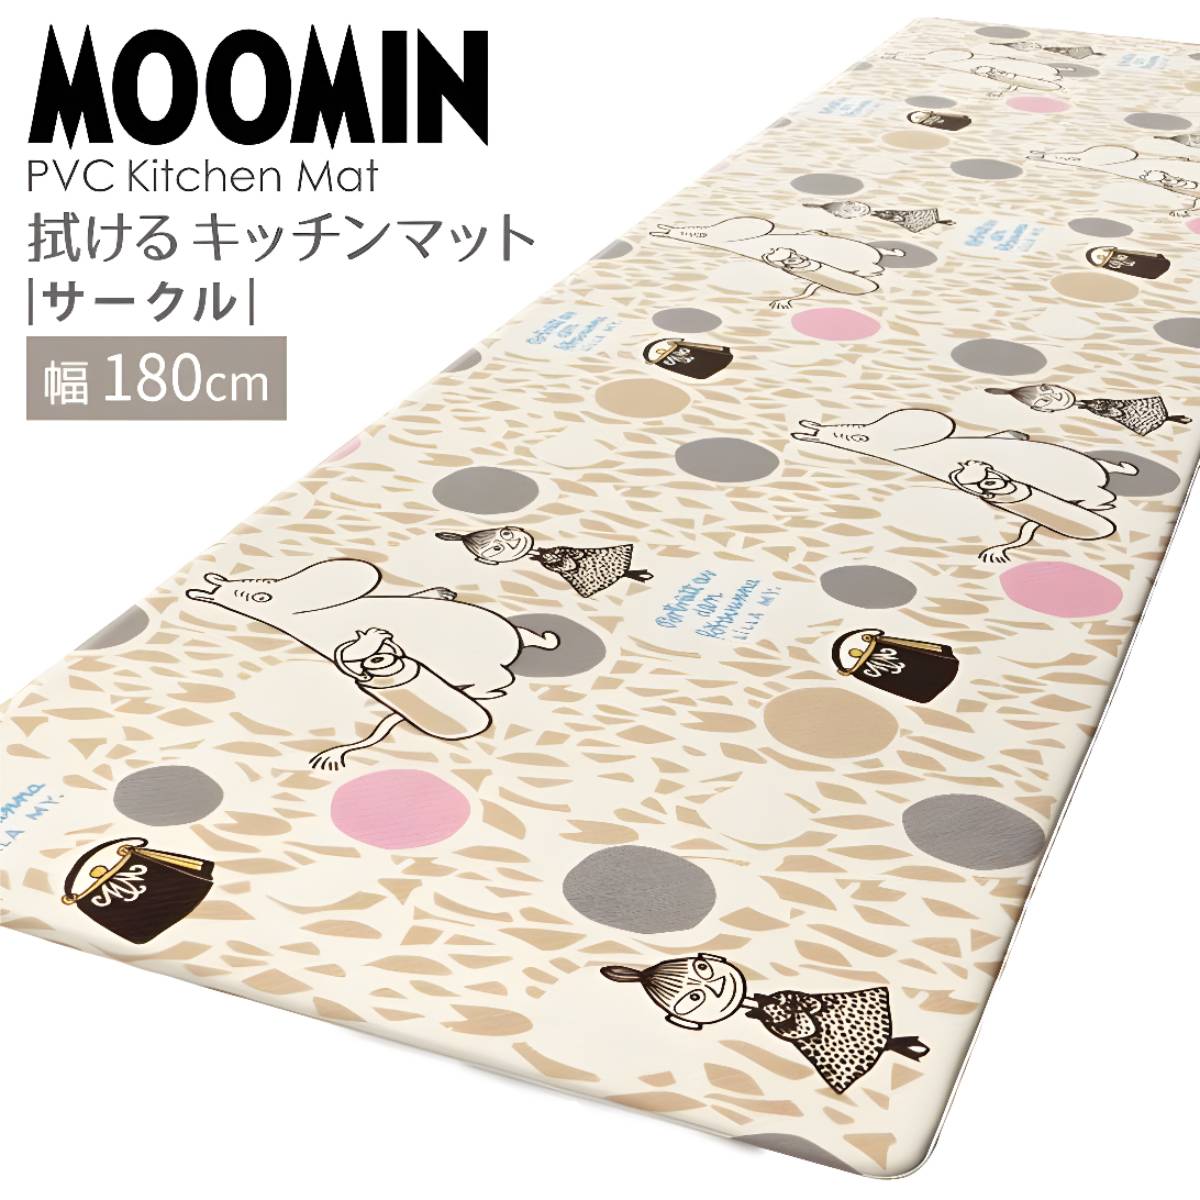 Kitchen Mat - Moomin (Japan Edition)